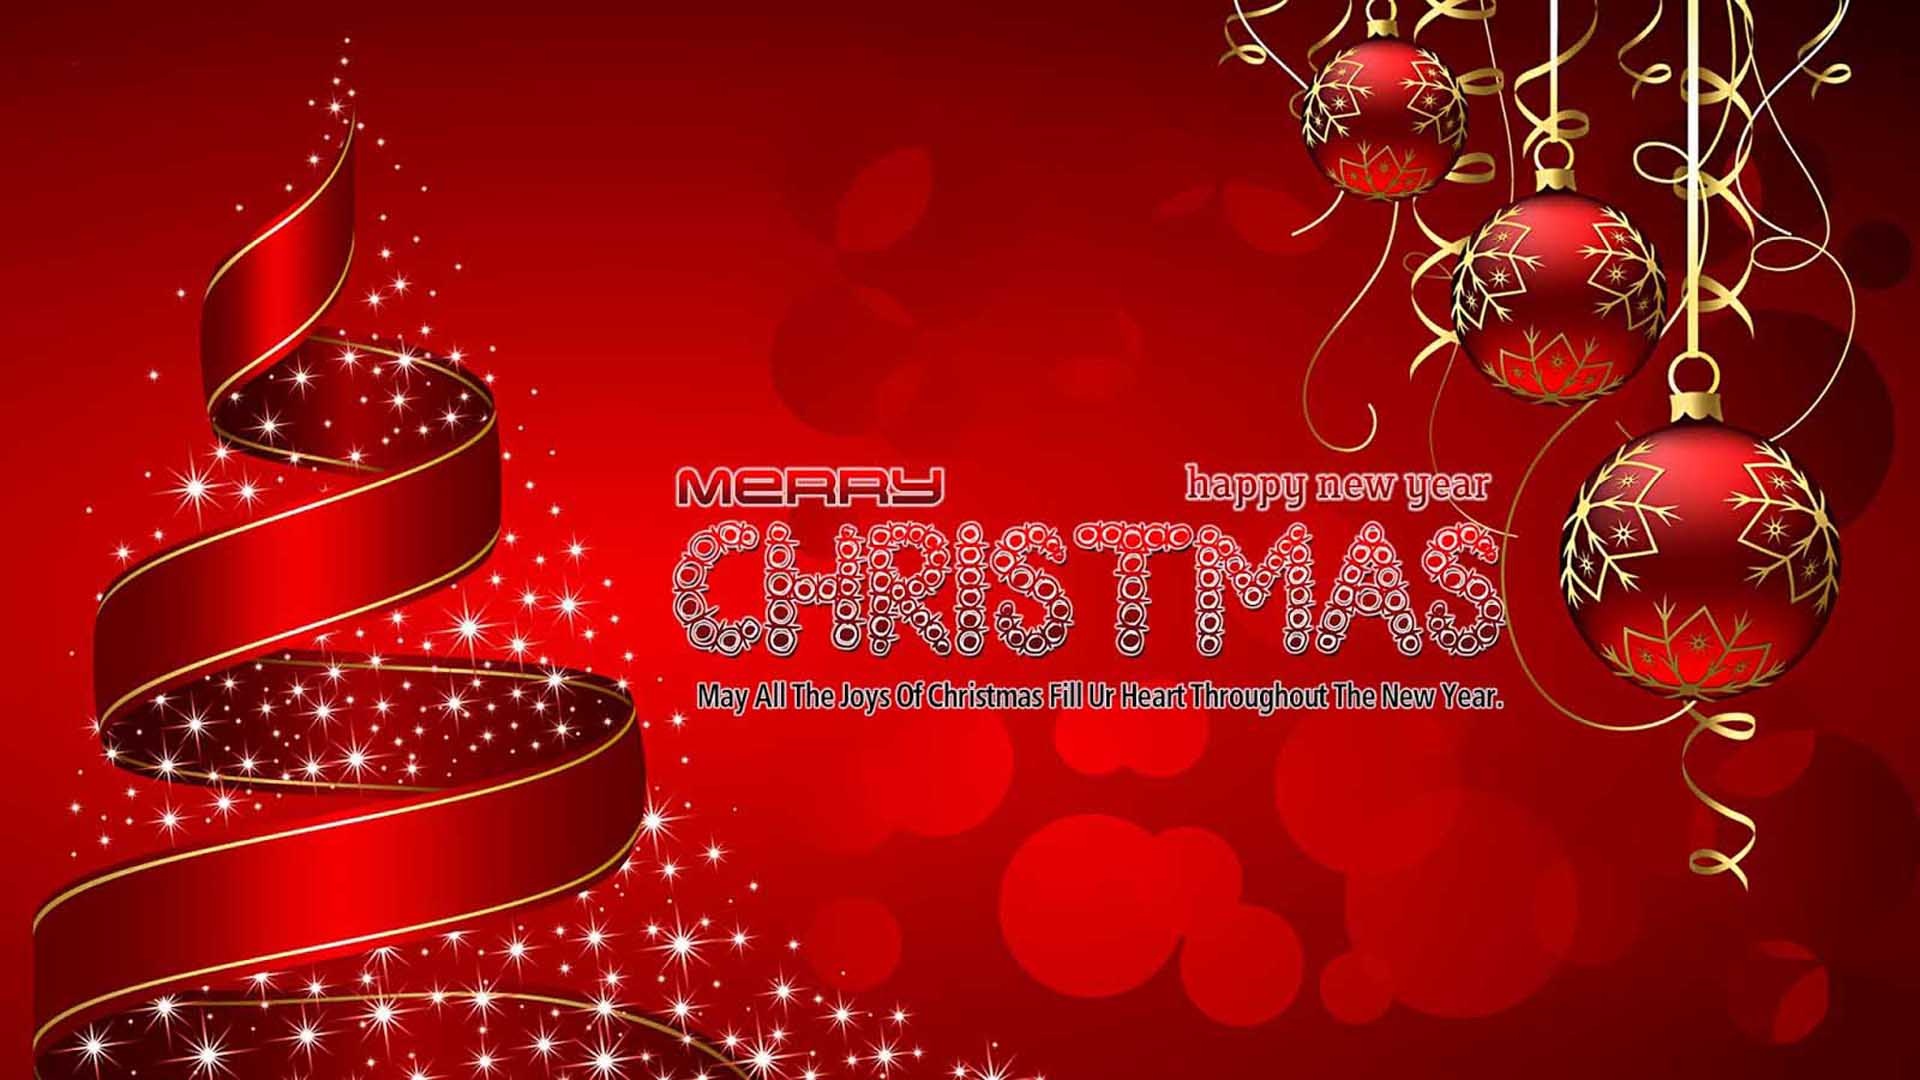 Merry Christmas Happy New Year 2022 Christmas Greetings Desktop Hd Wallpaper 1920x1080